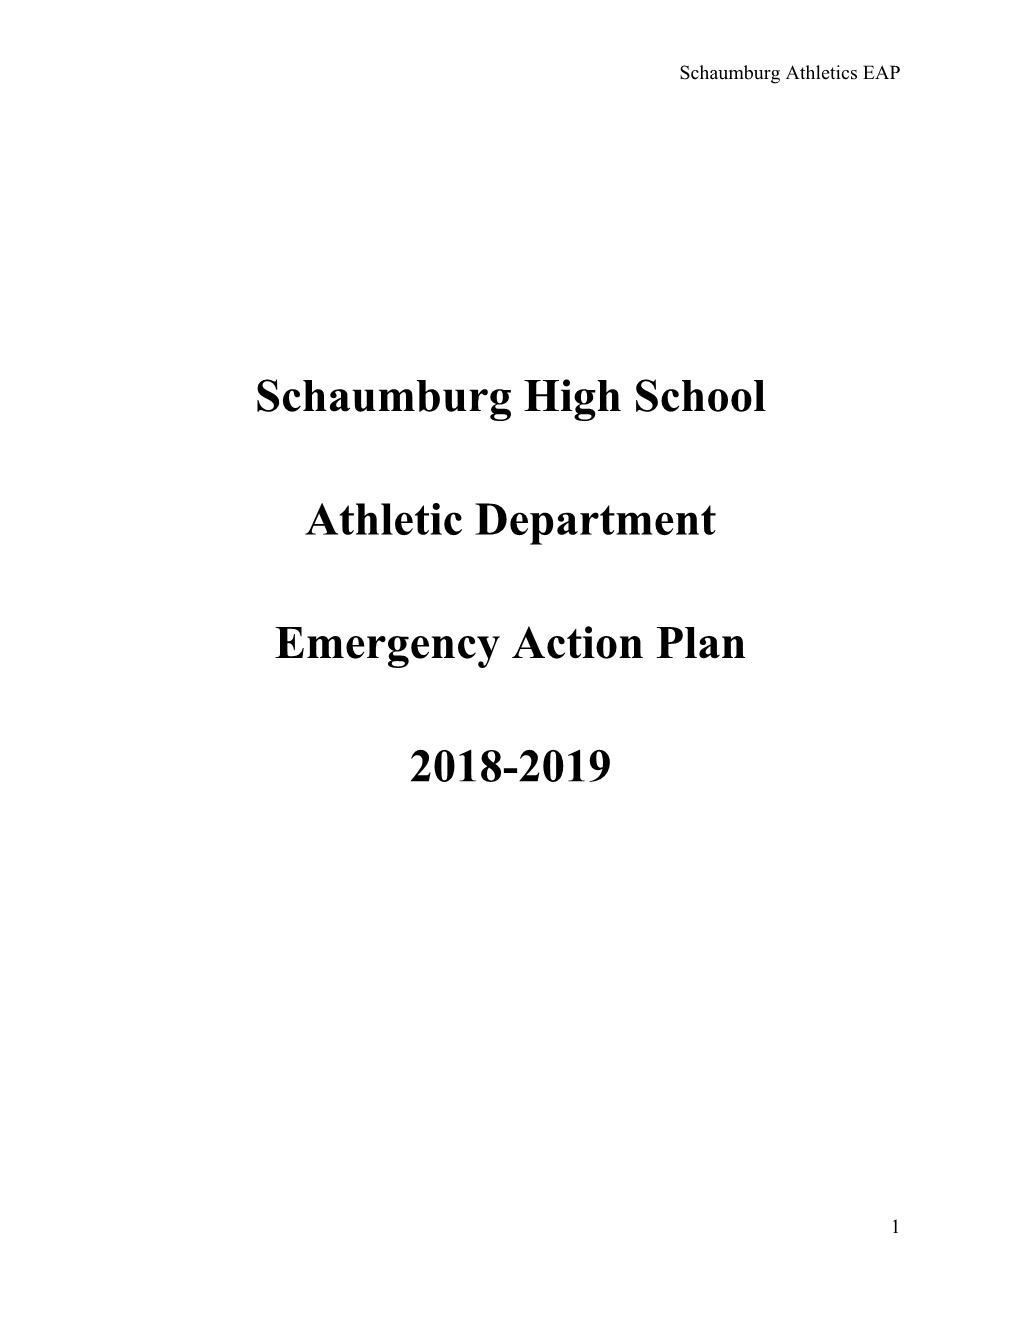 Schaumburg High School Athletic Department Emergency Action Plan